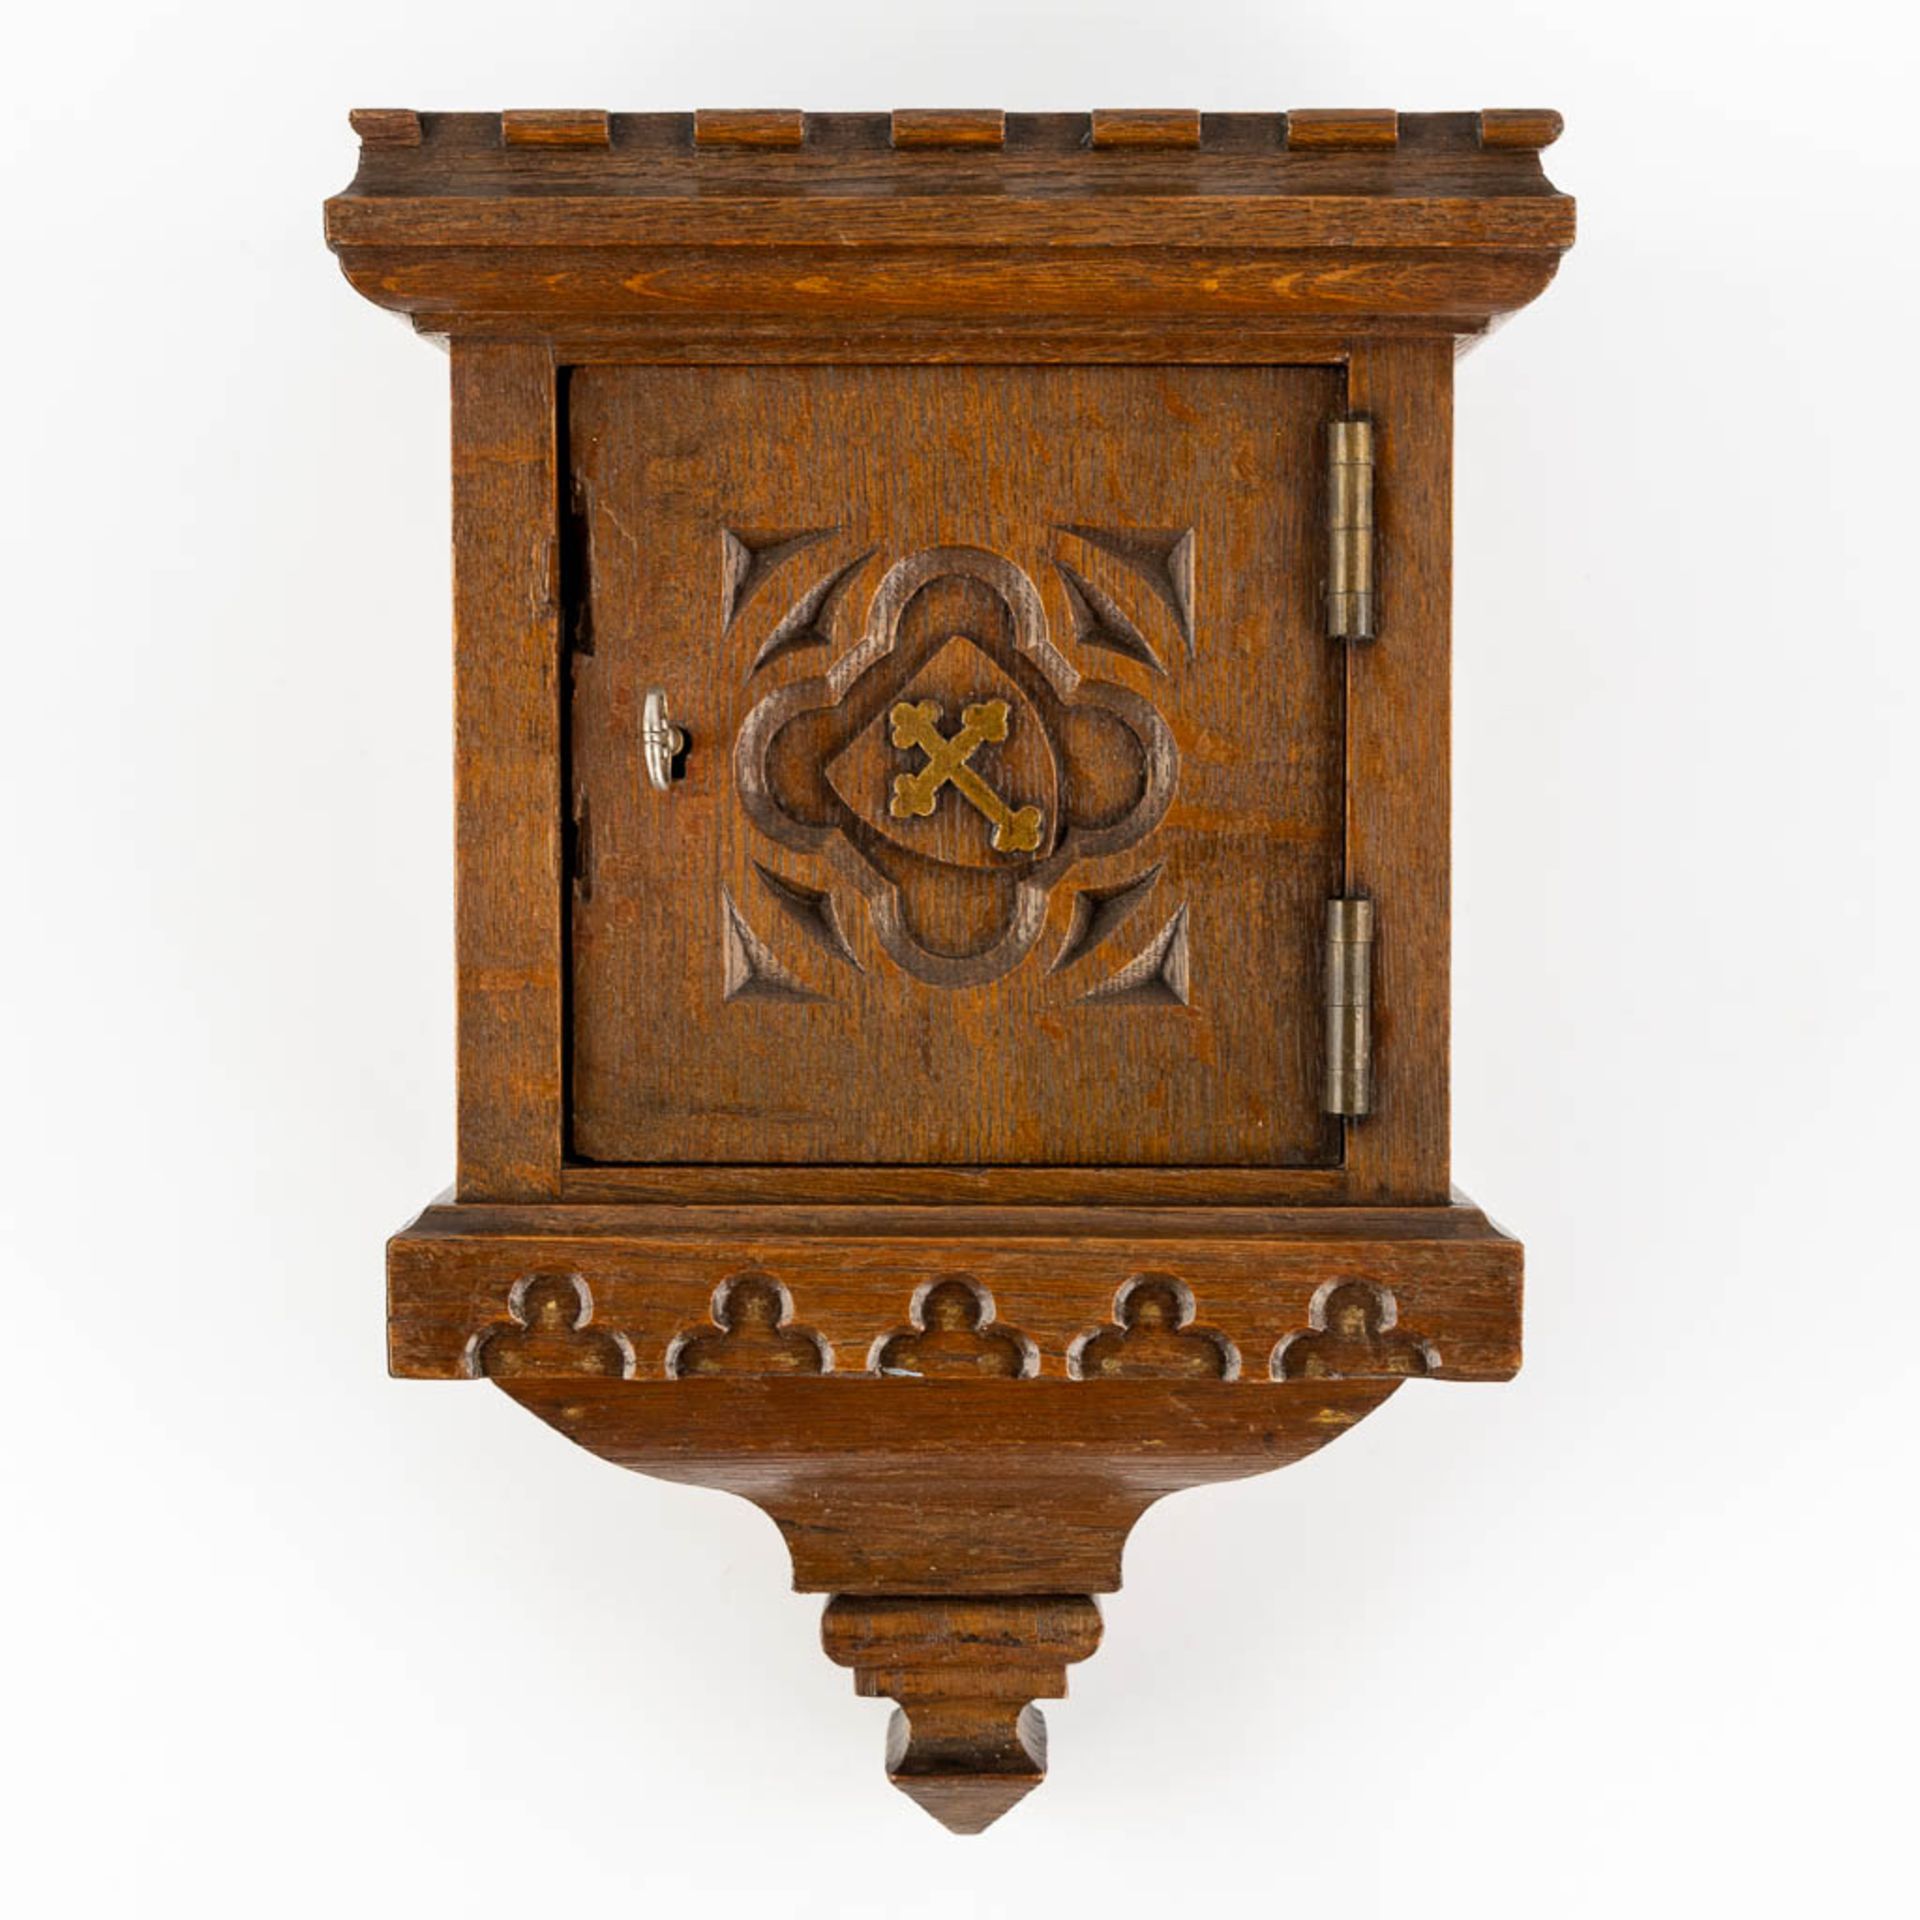 An Offertory or Poor box, sculptured oak, gothic revival. (L:20 x W:27 x H:42 cm)